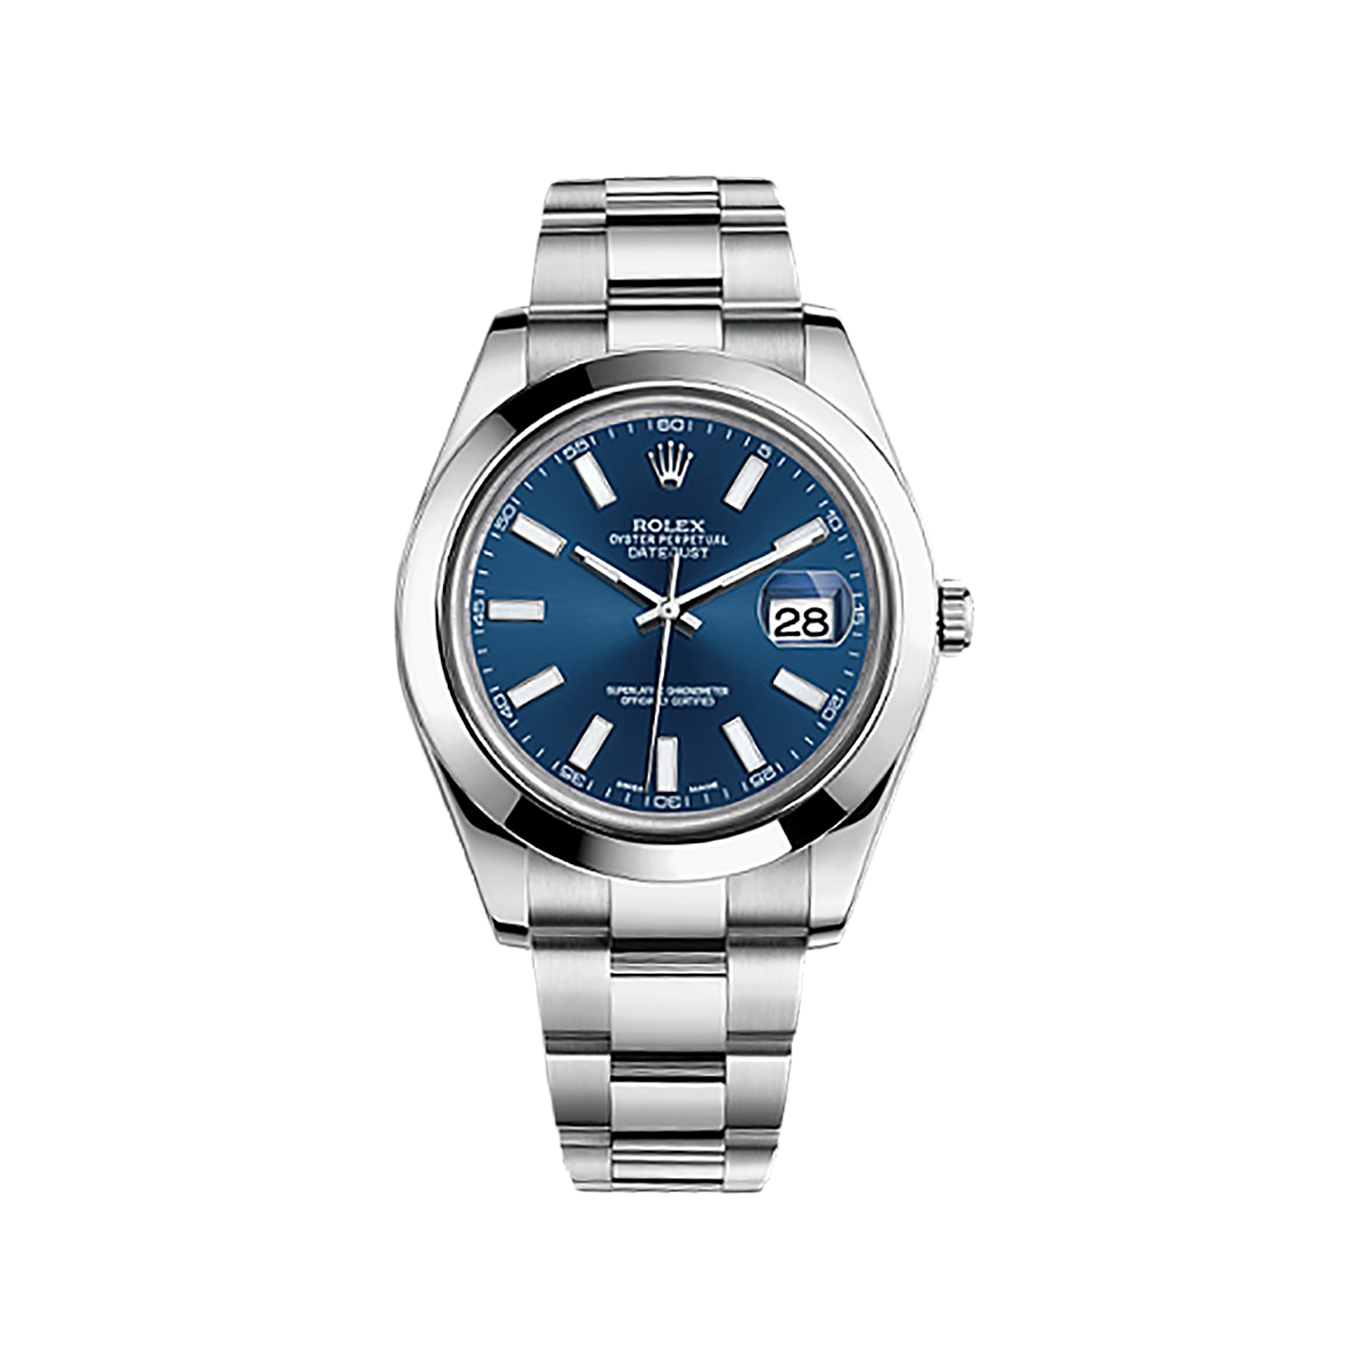 Datejust II 116300 Stainless Steel Watch (Blue)